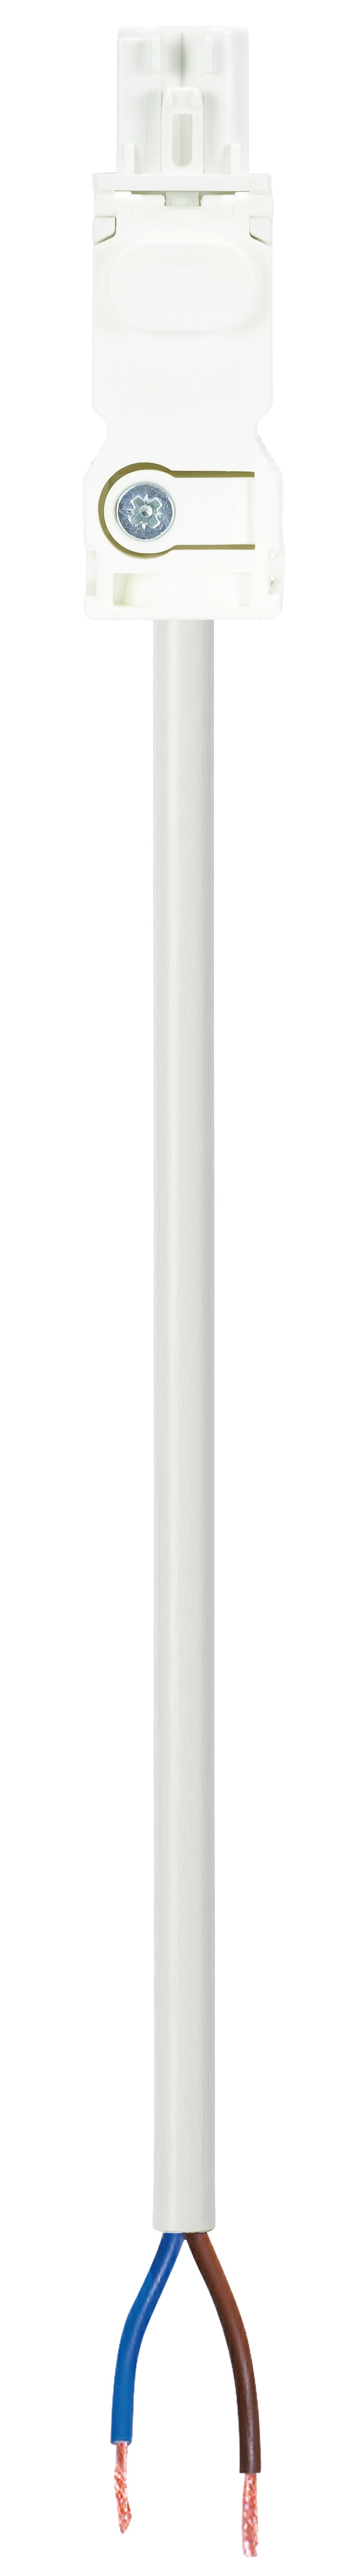 Wieland - cordon GST15i2 4m f-- 1,52 HO5VVf blanc (Eca)